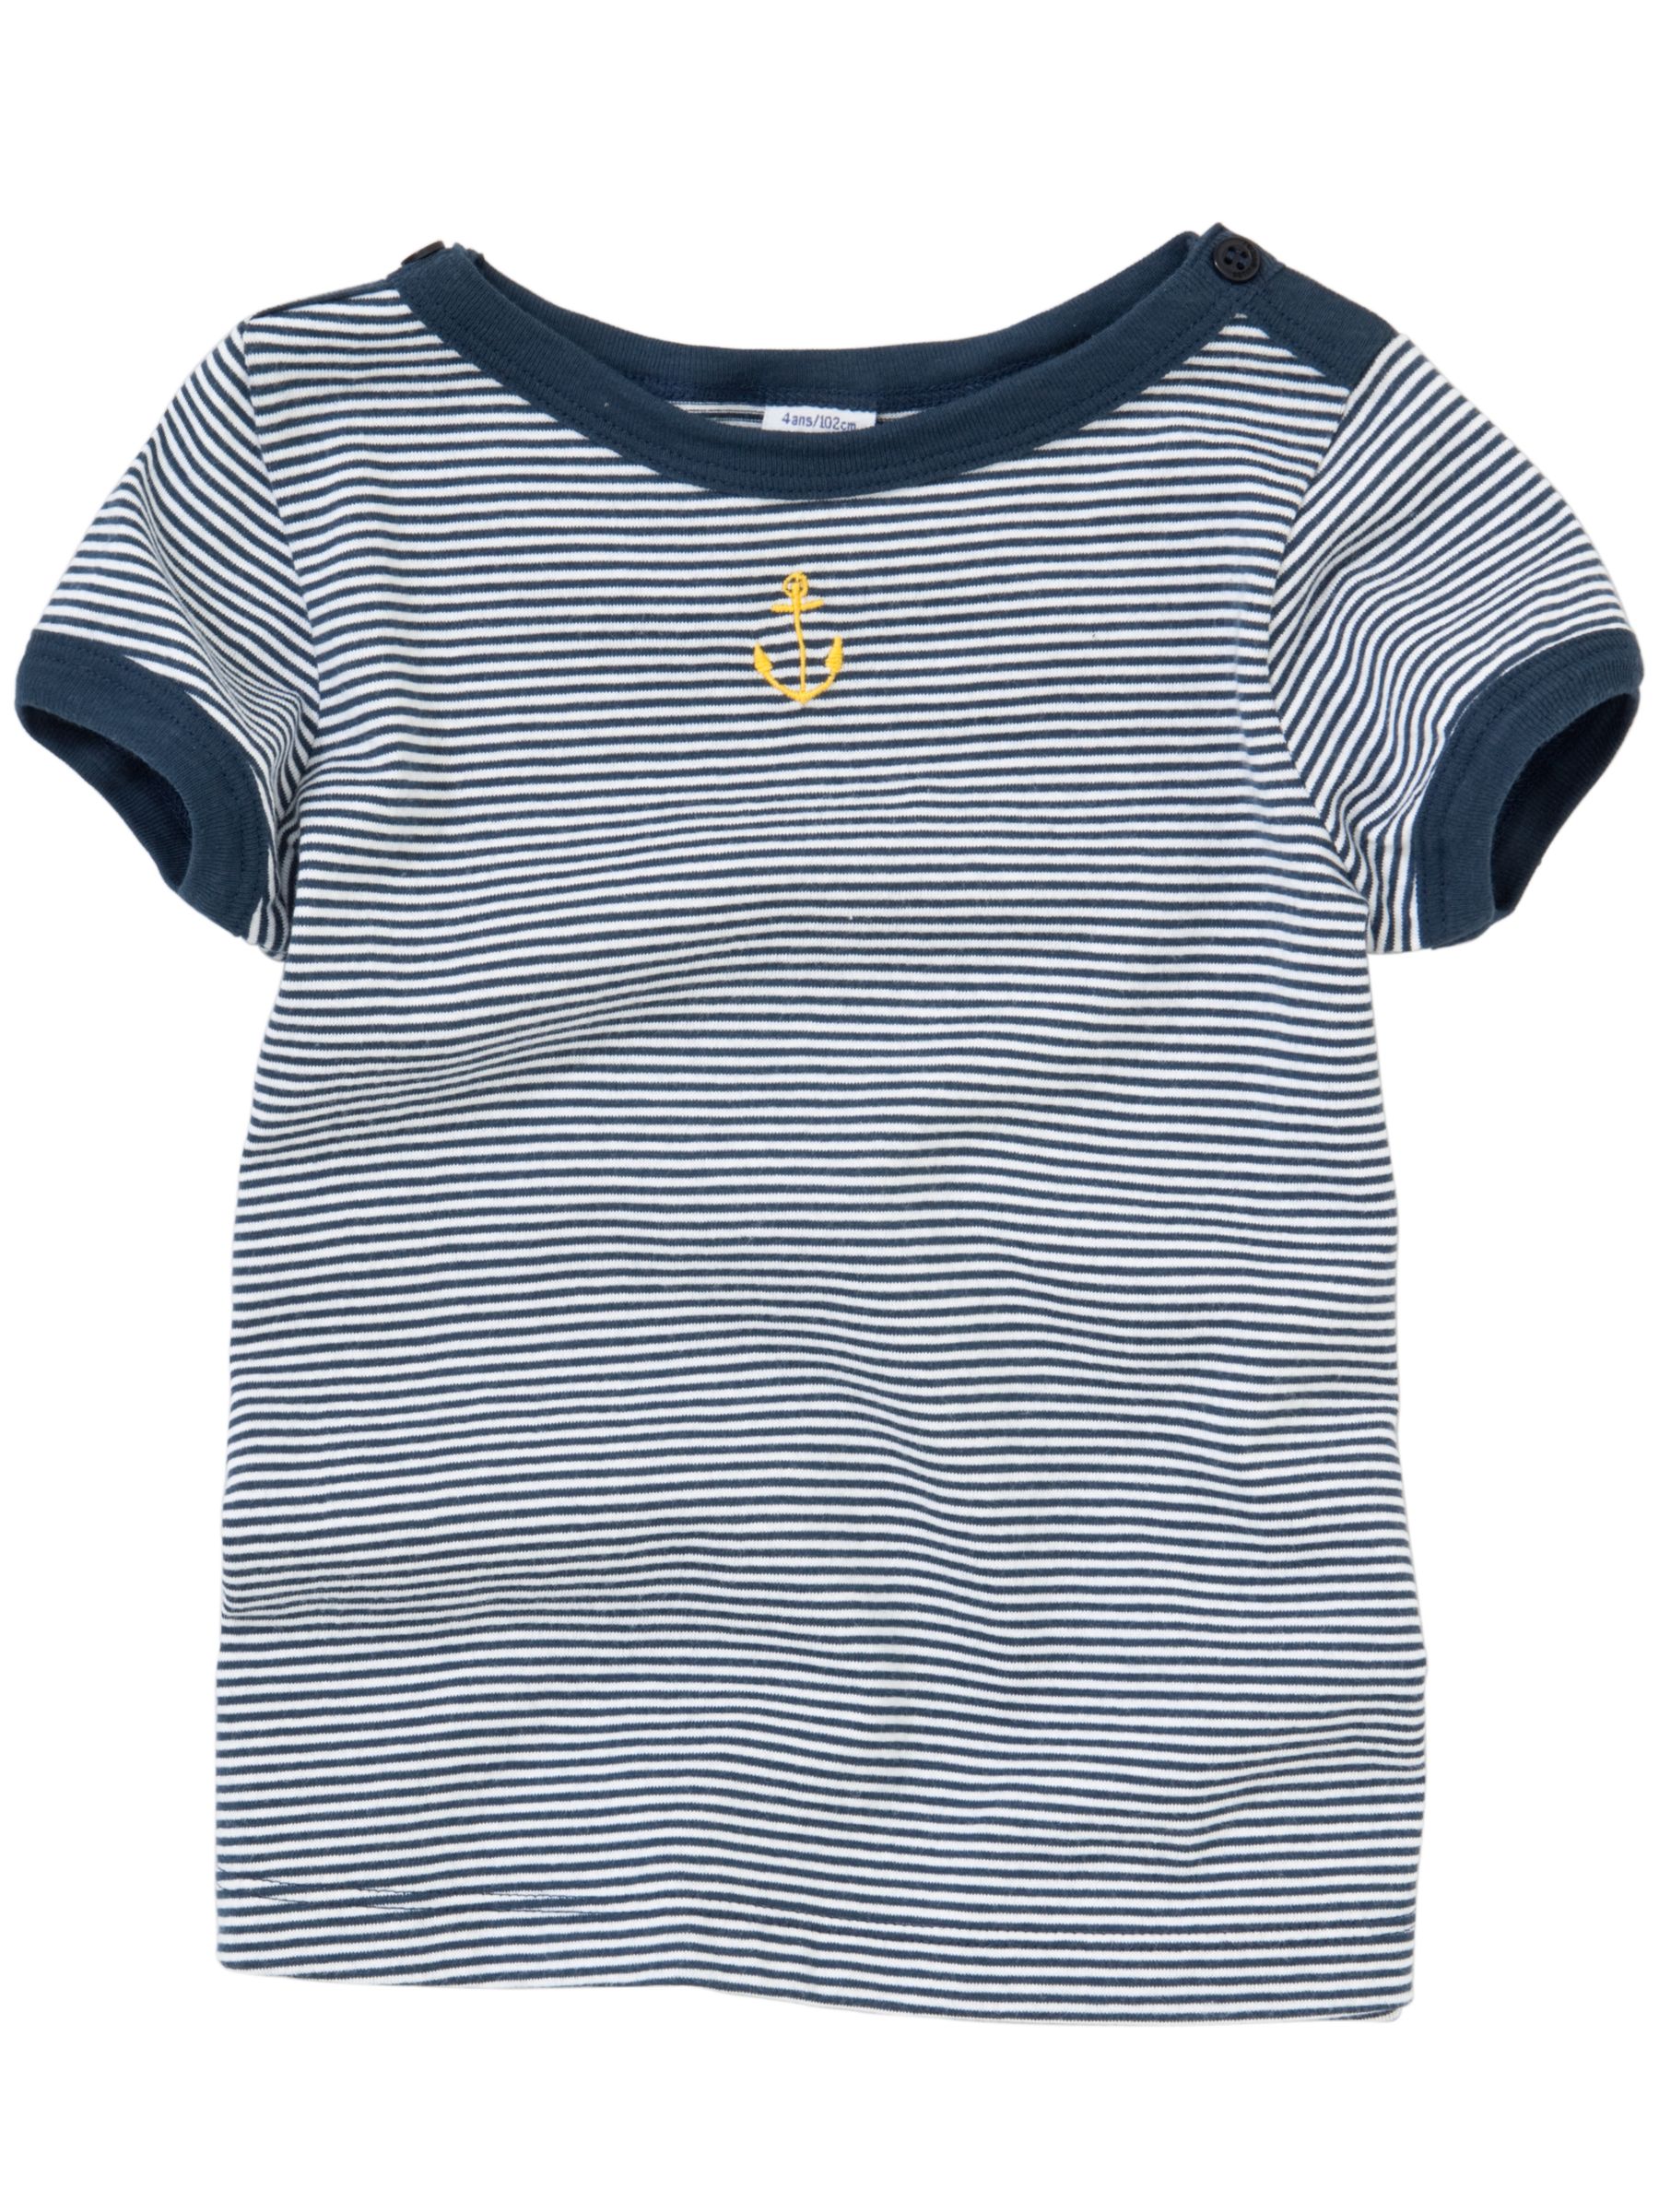 Stripe T-Shirt, Navy/cream